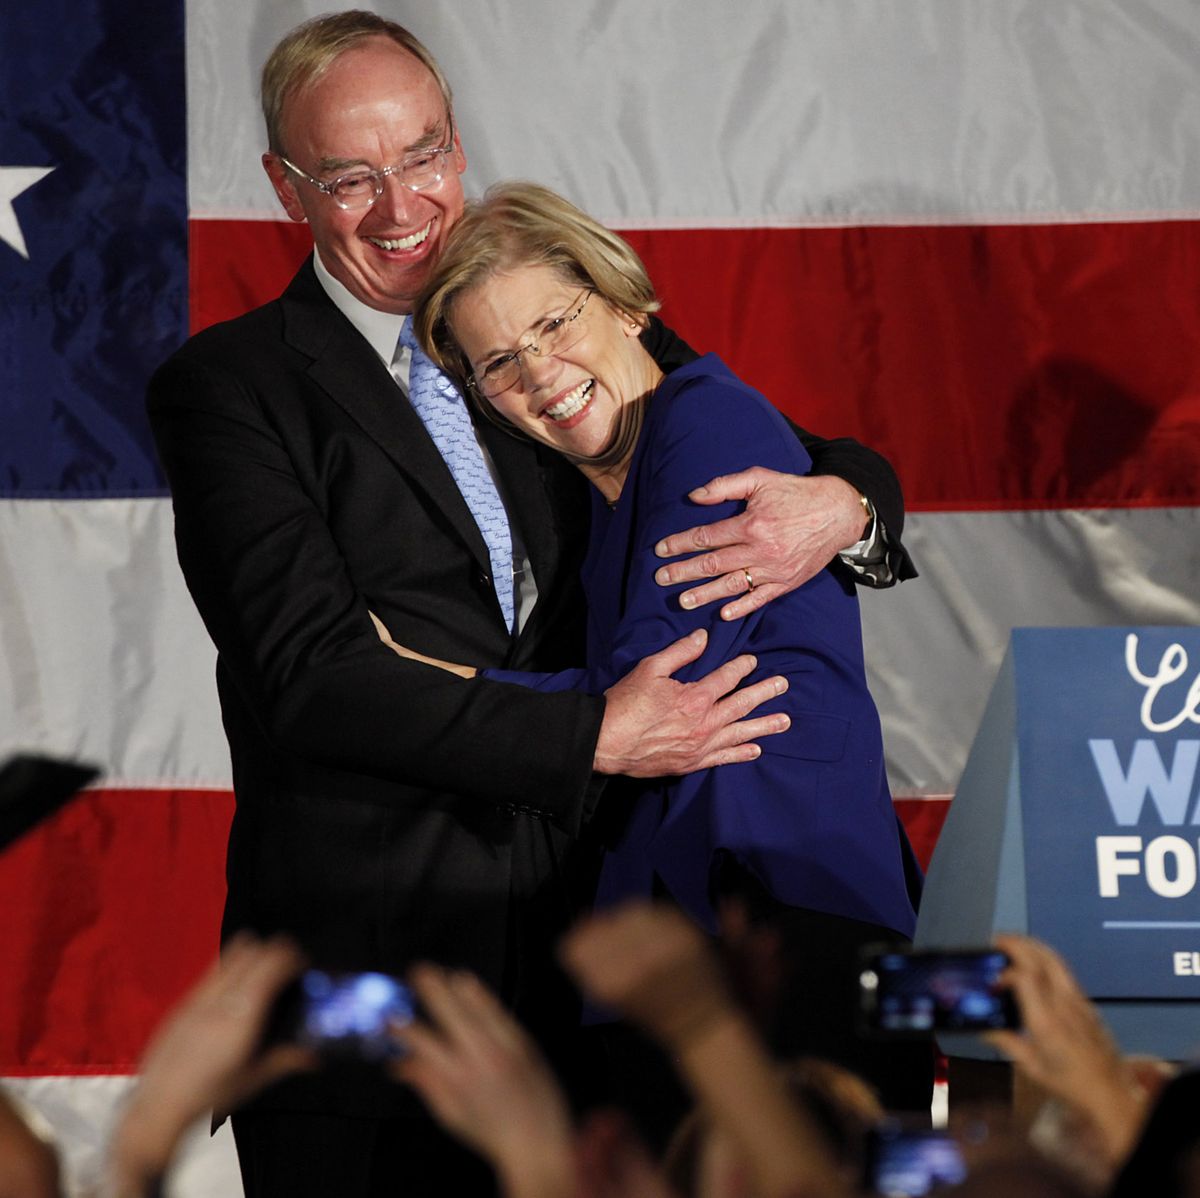 Elizabeth Warren with her husband bruce mann Wins Massachusetts Senate Race